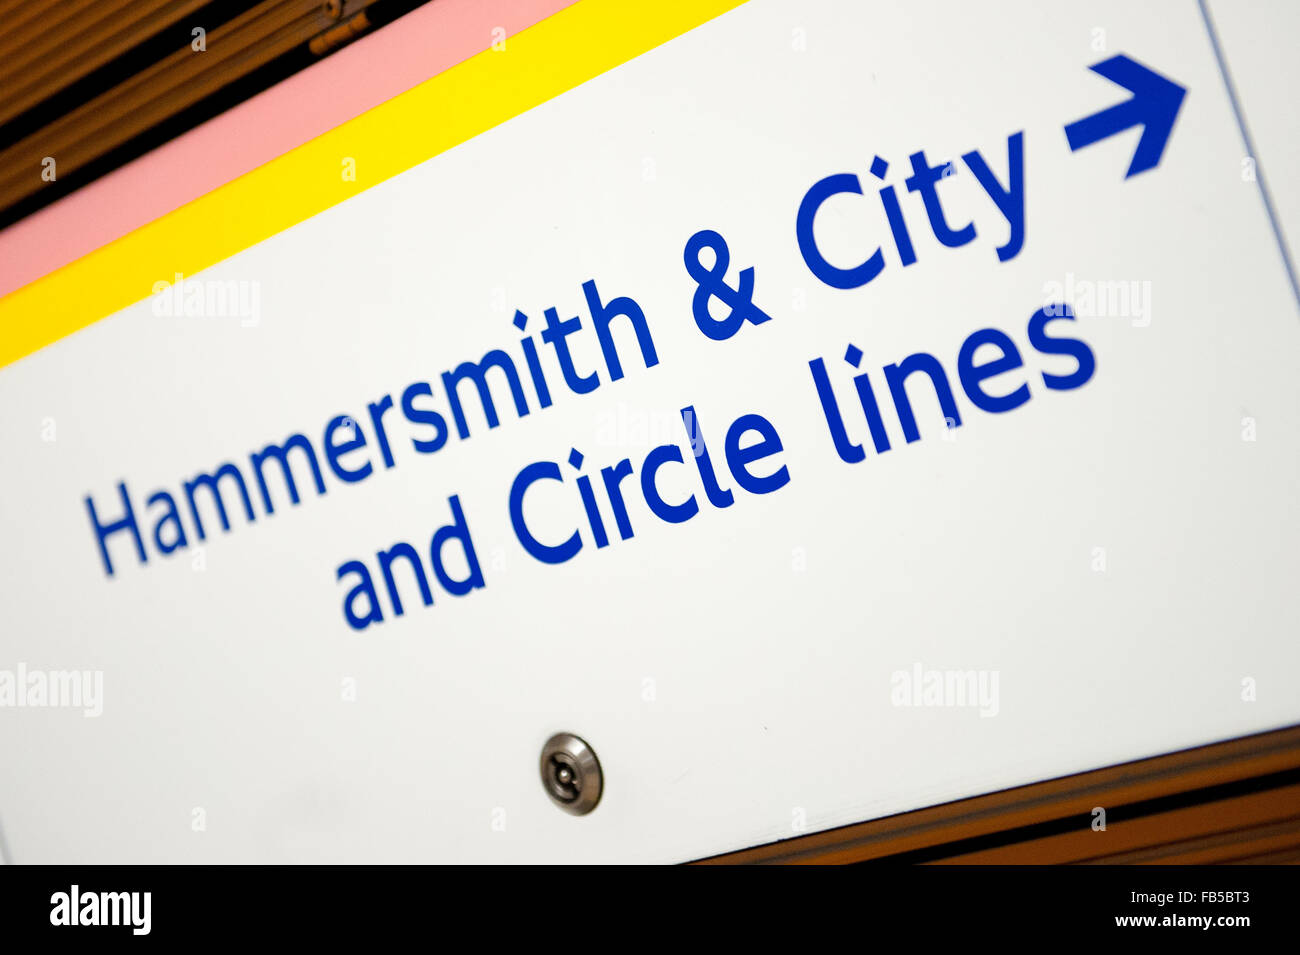 Hammersmith & City Line London Underground tube station in London Stock  Photo - Alamy